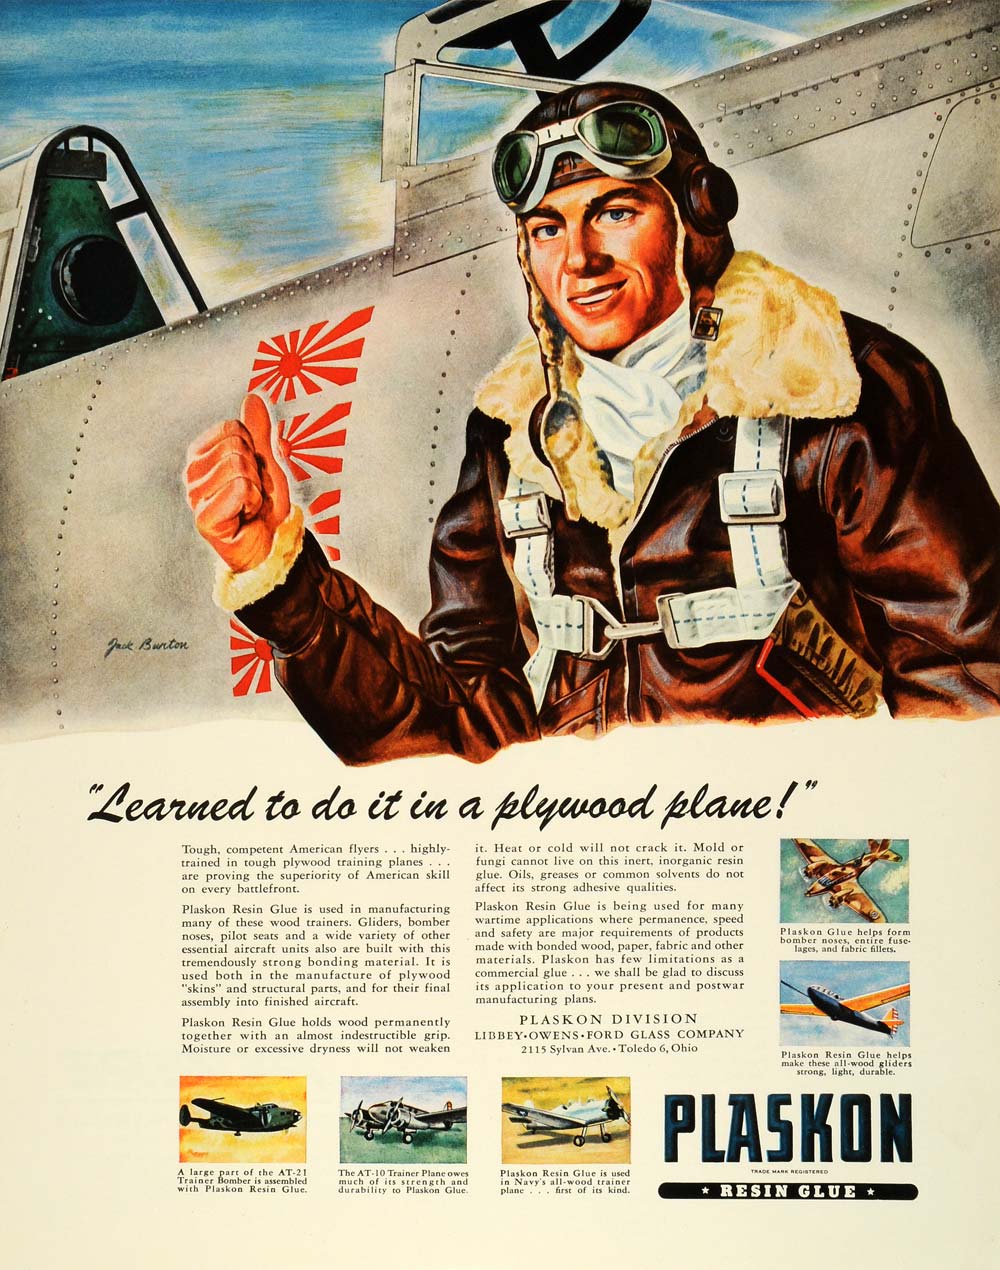 1944 Ad Plaskon Division Libbey Owens Glass Resign Glue Pilot WWII Jack FZ6